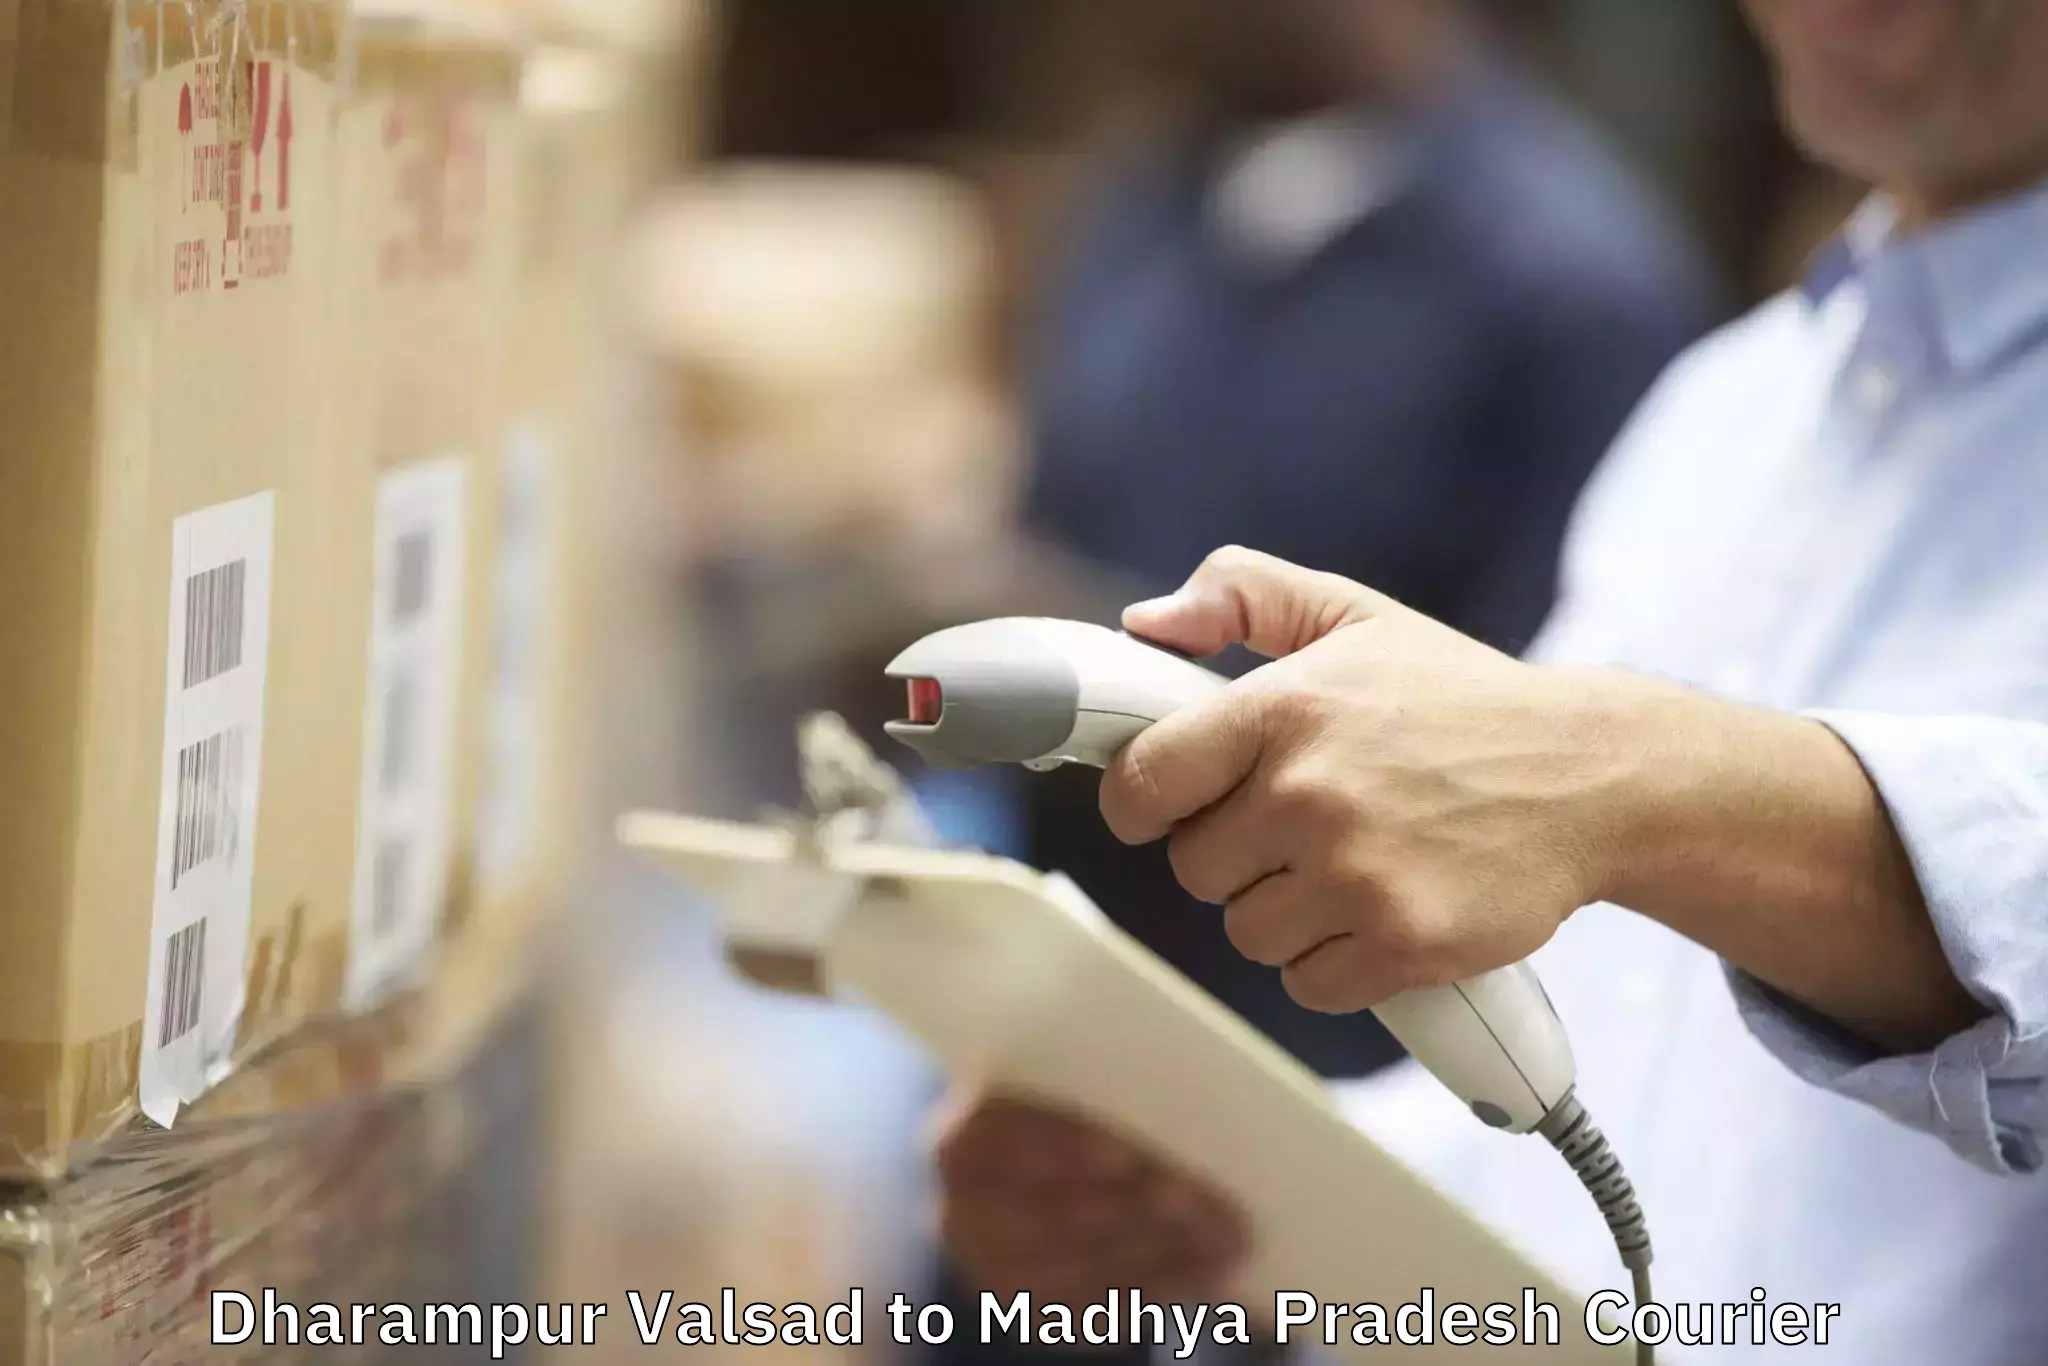 Furniture moving experts Dharampur Valsad to Madhya Pradesh